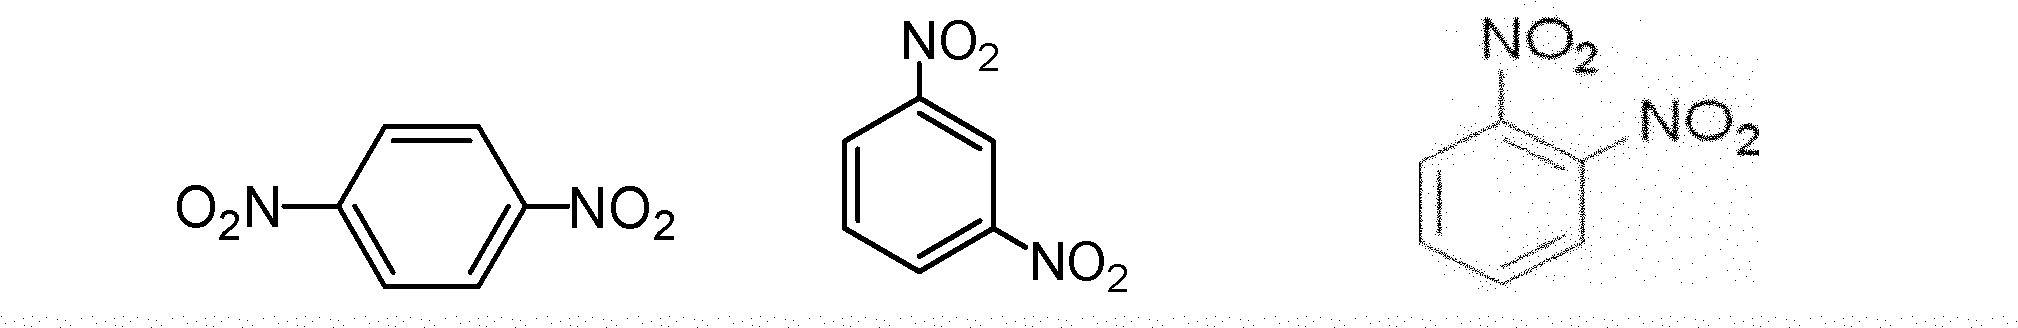 Method for producing phenylene diamine by performing hydrogenation reduction on mixed dinitrobenzene with palladium catalyst